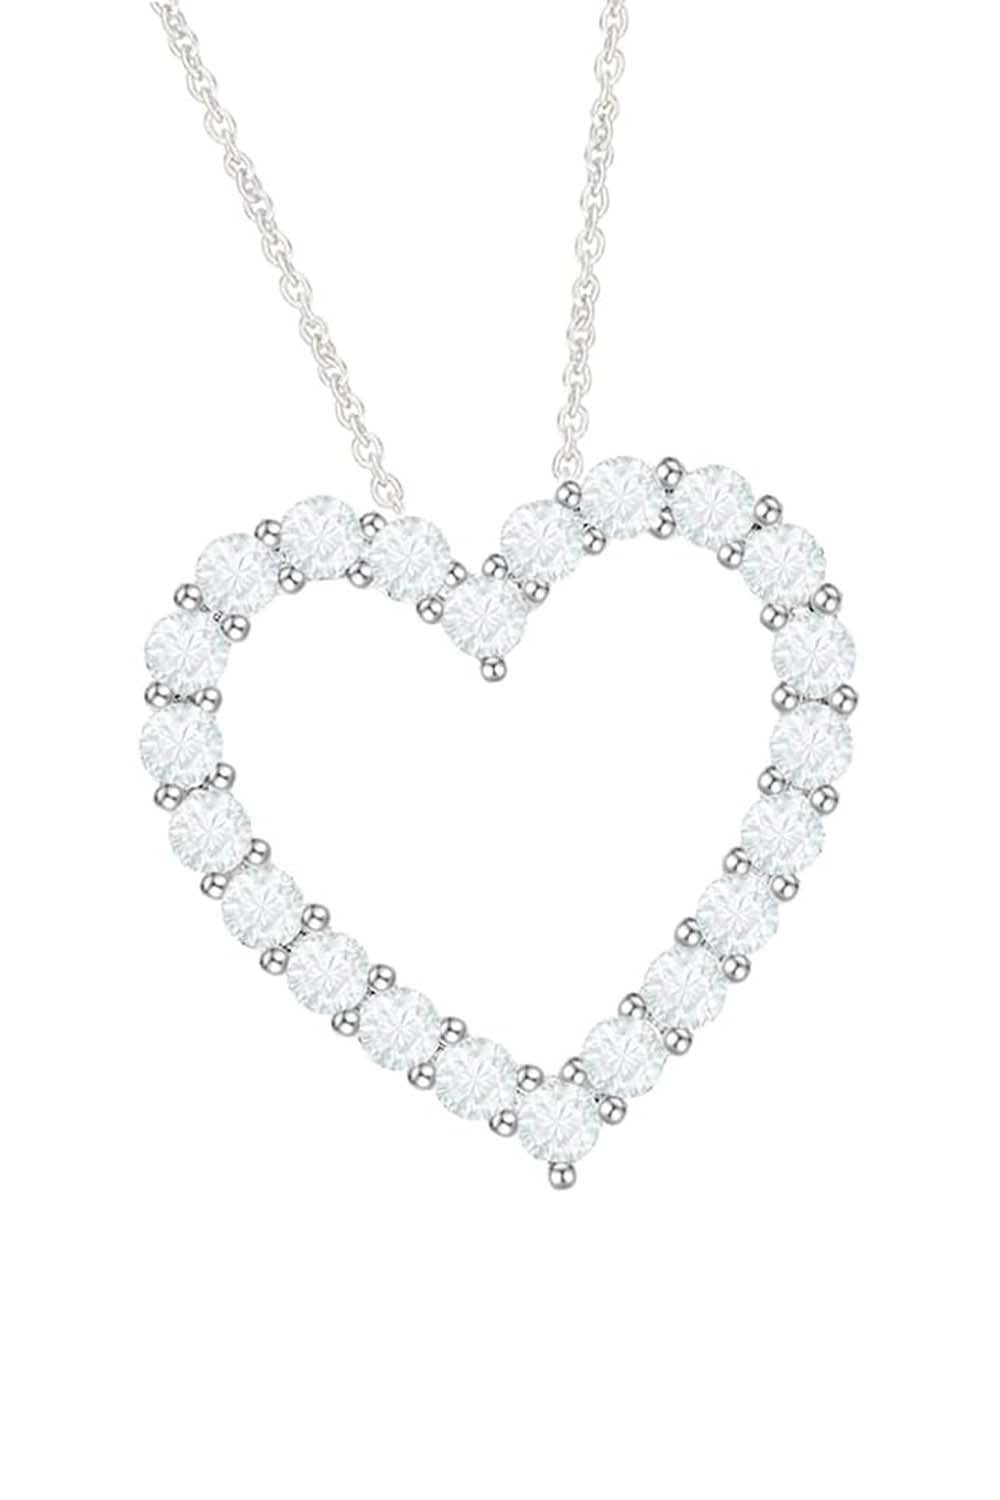 White Gold Color Moissanite Heart Necklace, Heart Pendant Necklace 